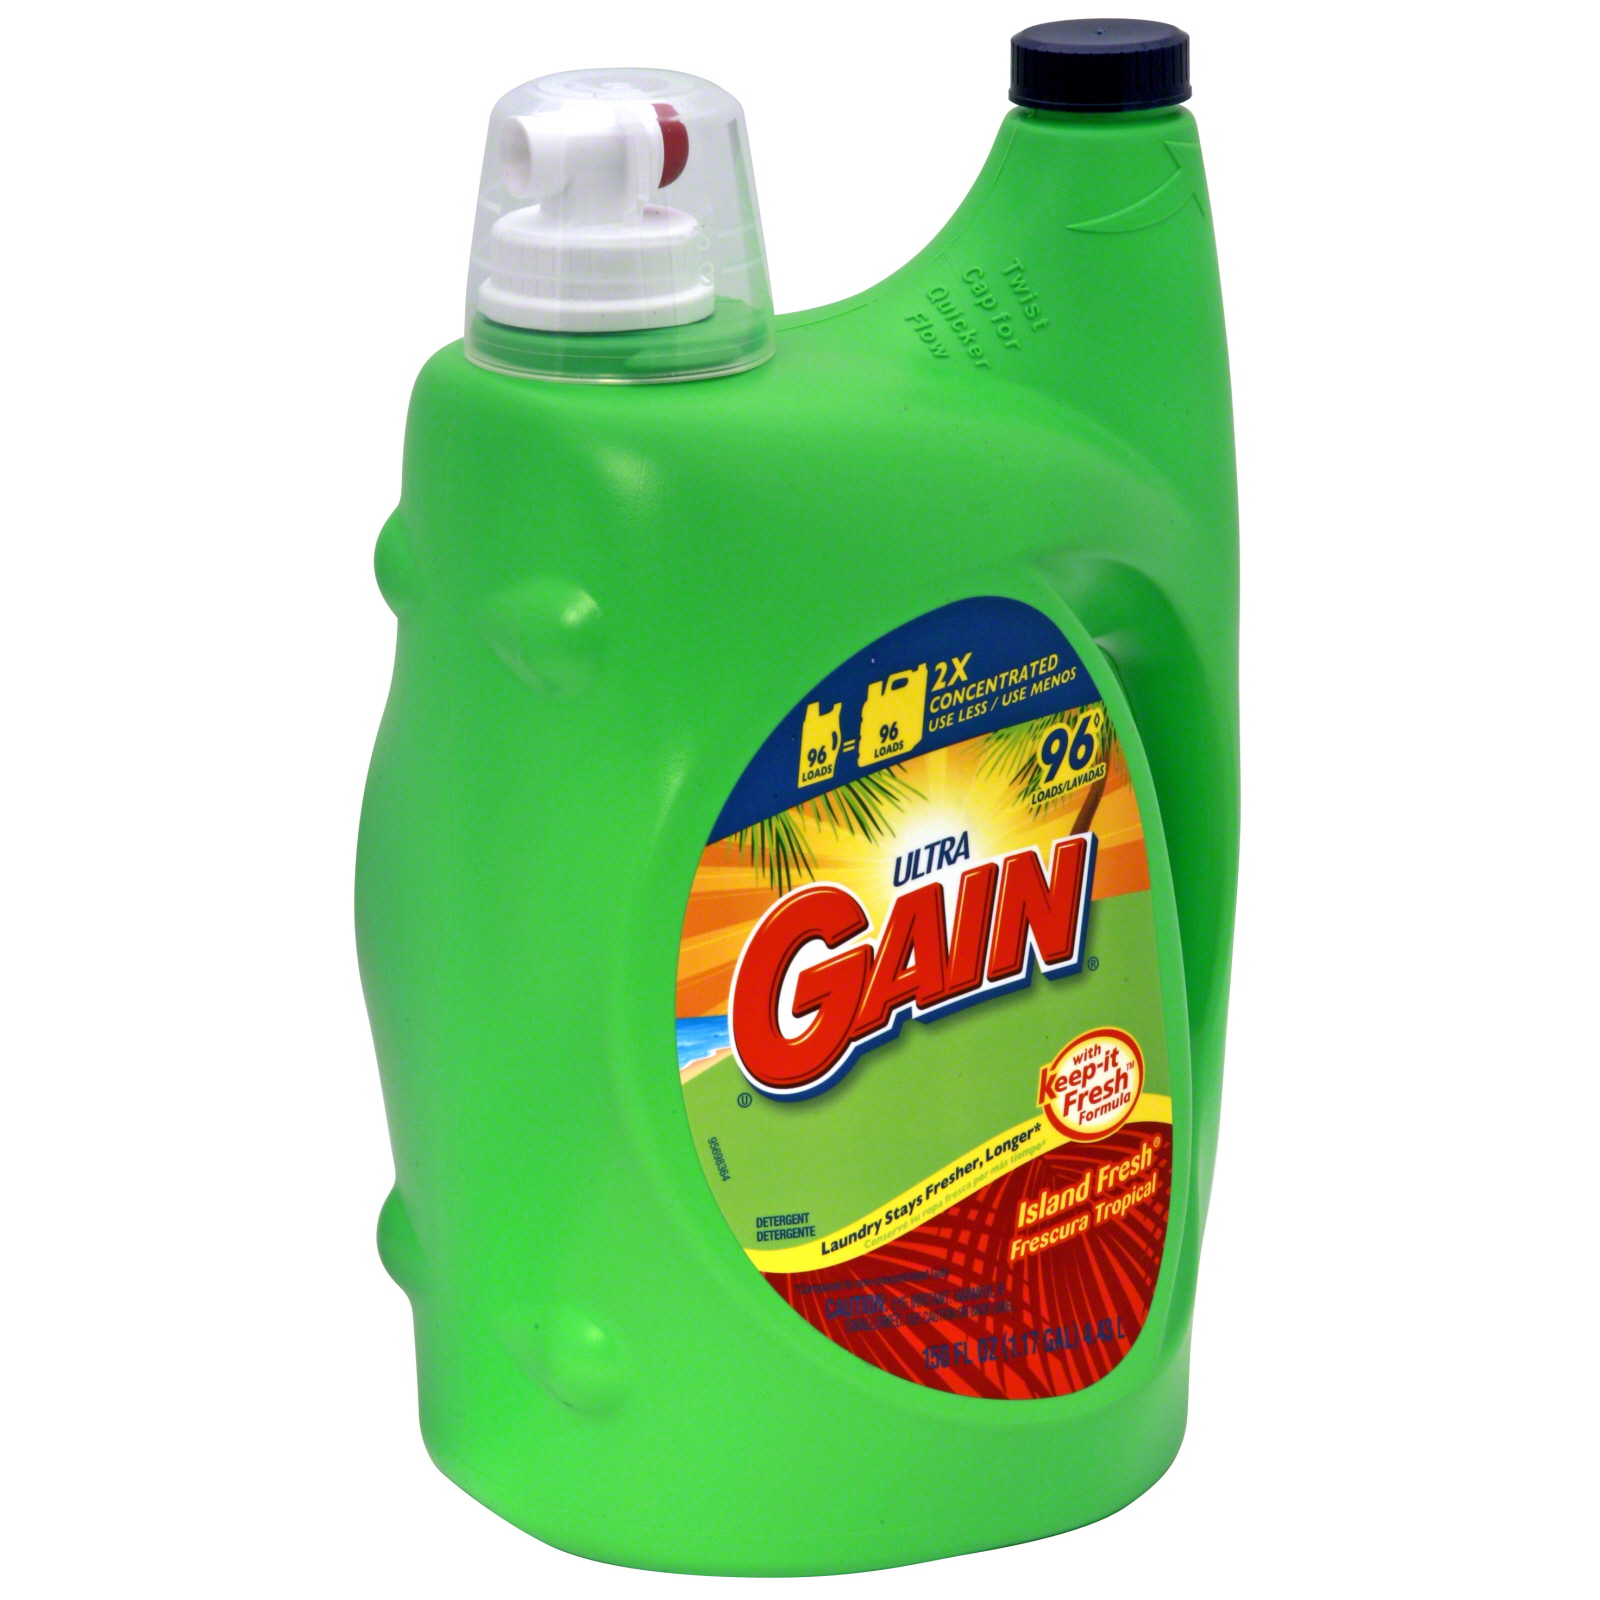 Gain Laundry Detergent, Ultra, Island Fresh, 150 fl oz (1.17 gal) 4.43 lt